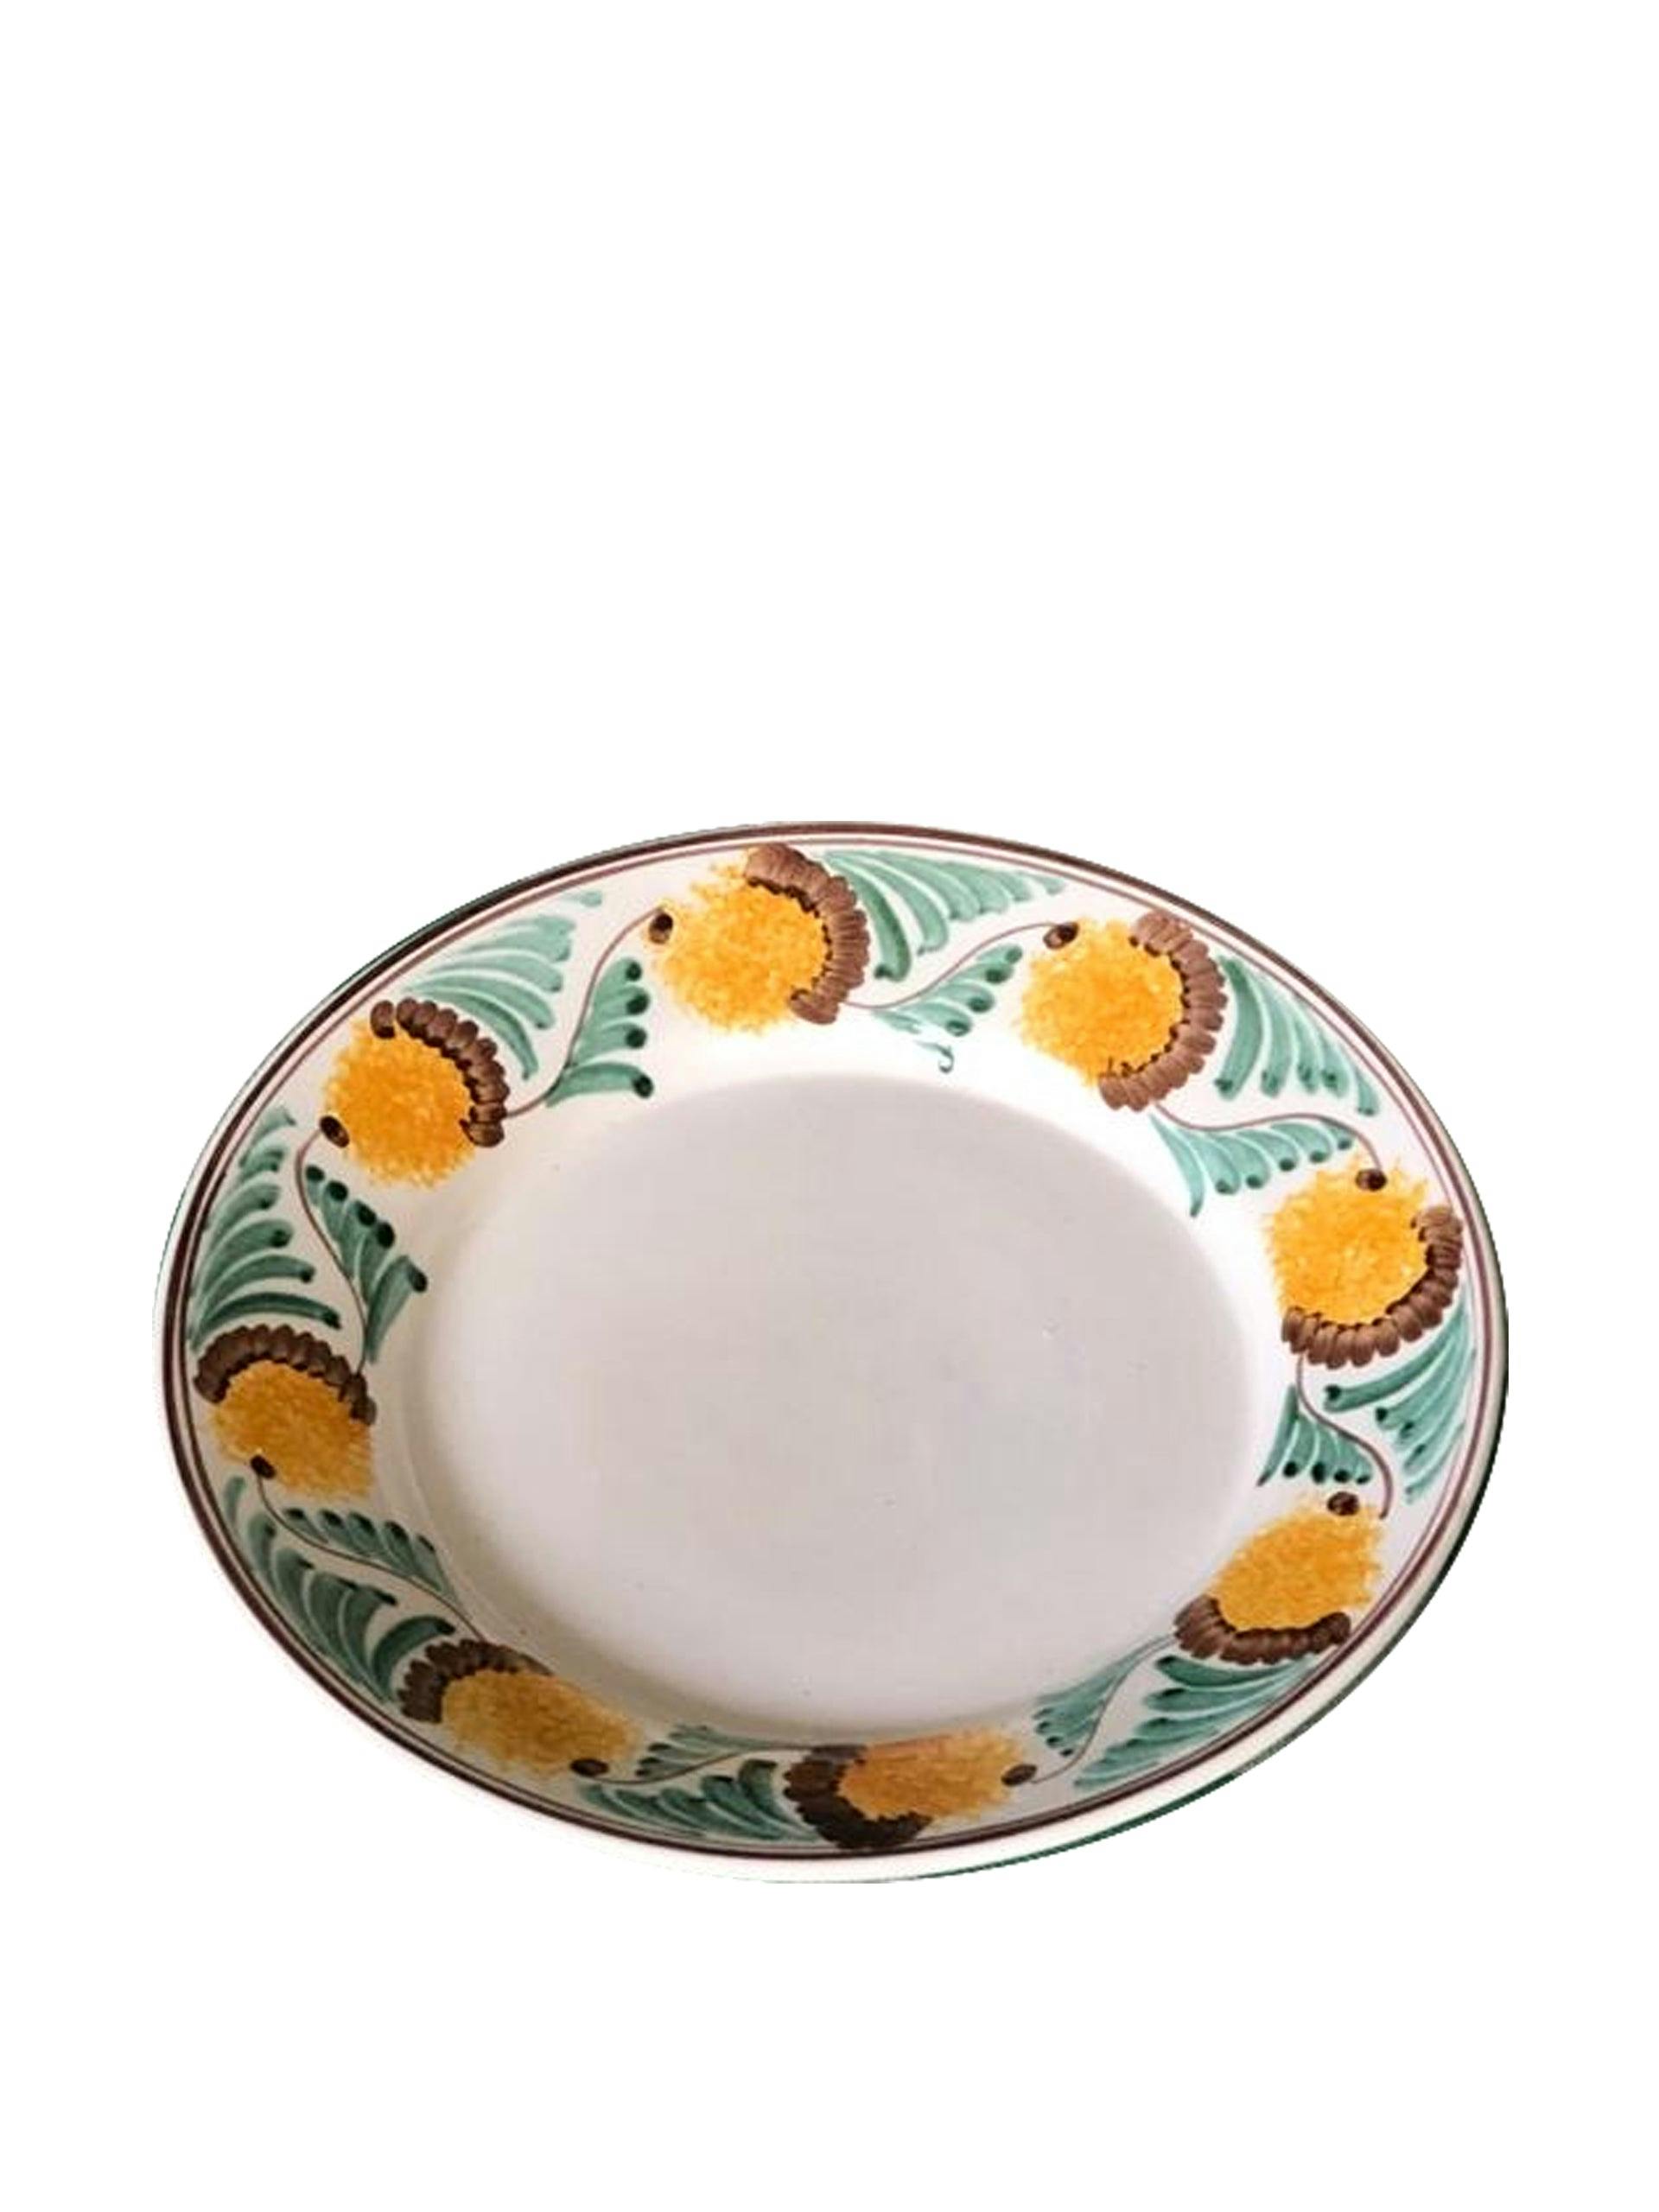 Marigold dessert plate